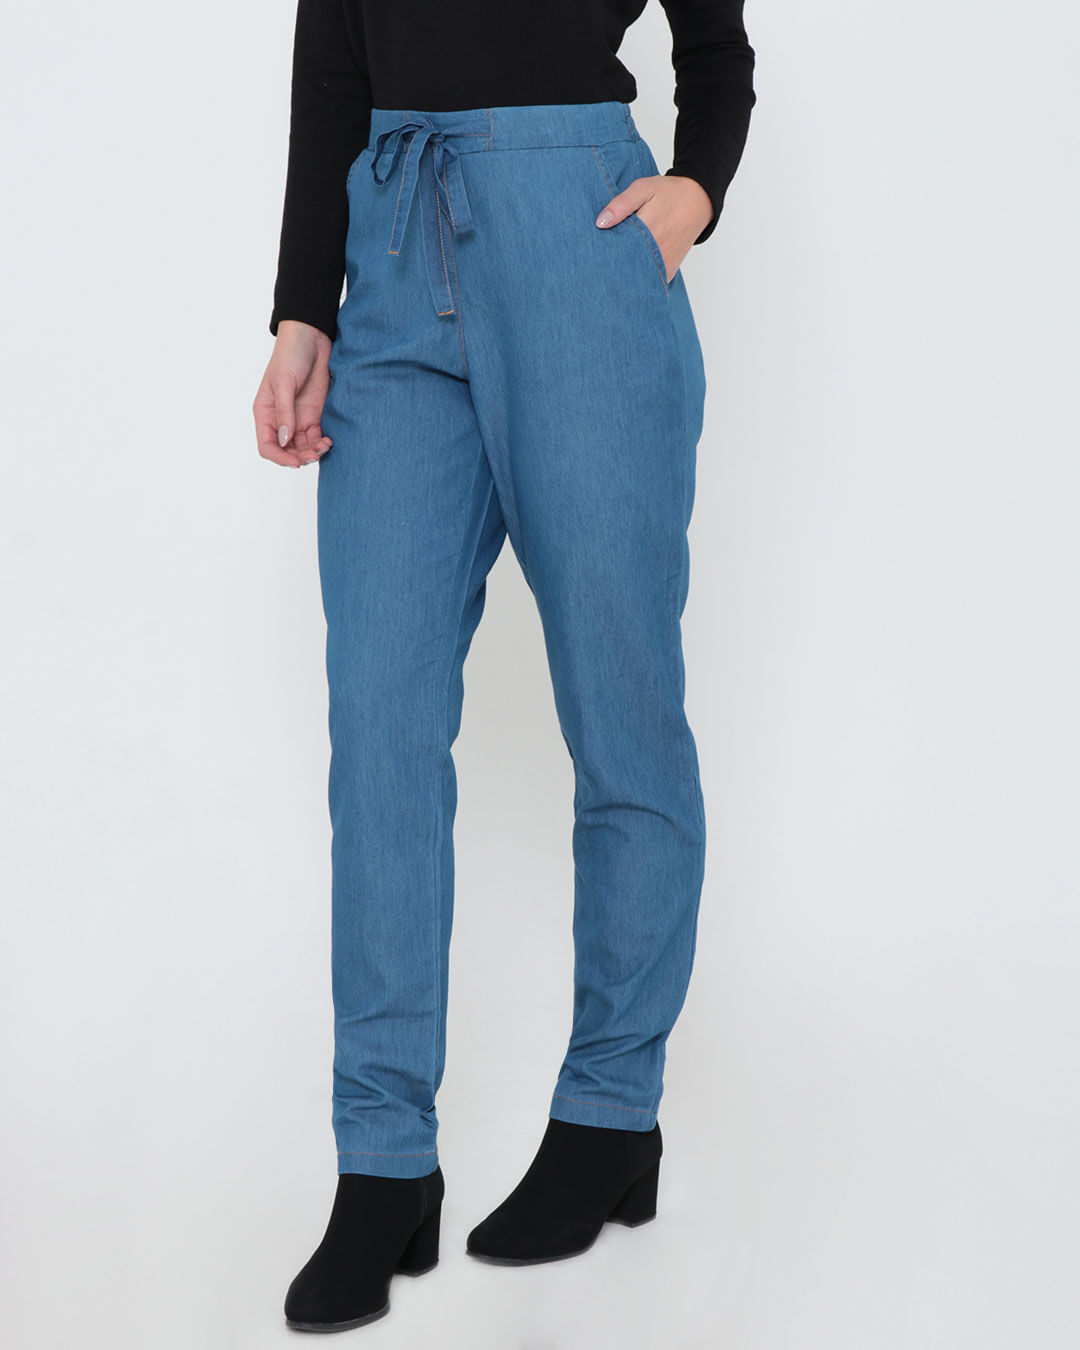 Calca-Jeans-Feminina-Elastico-Reta-Azul